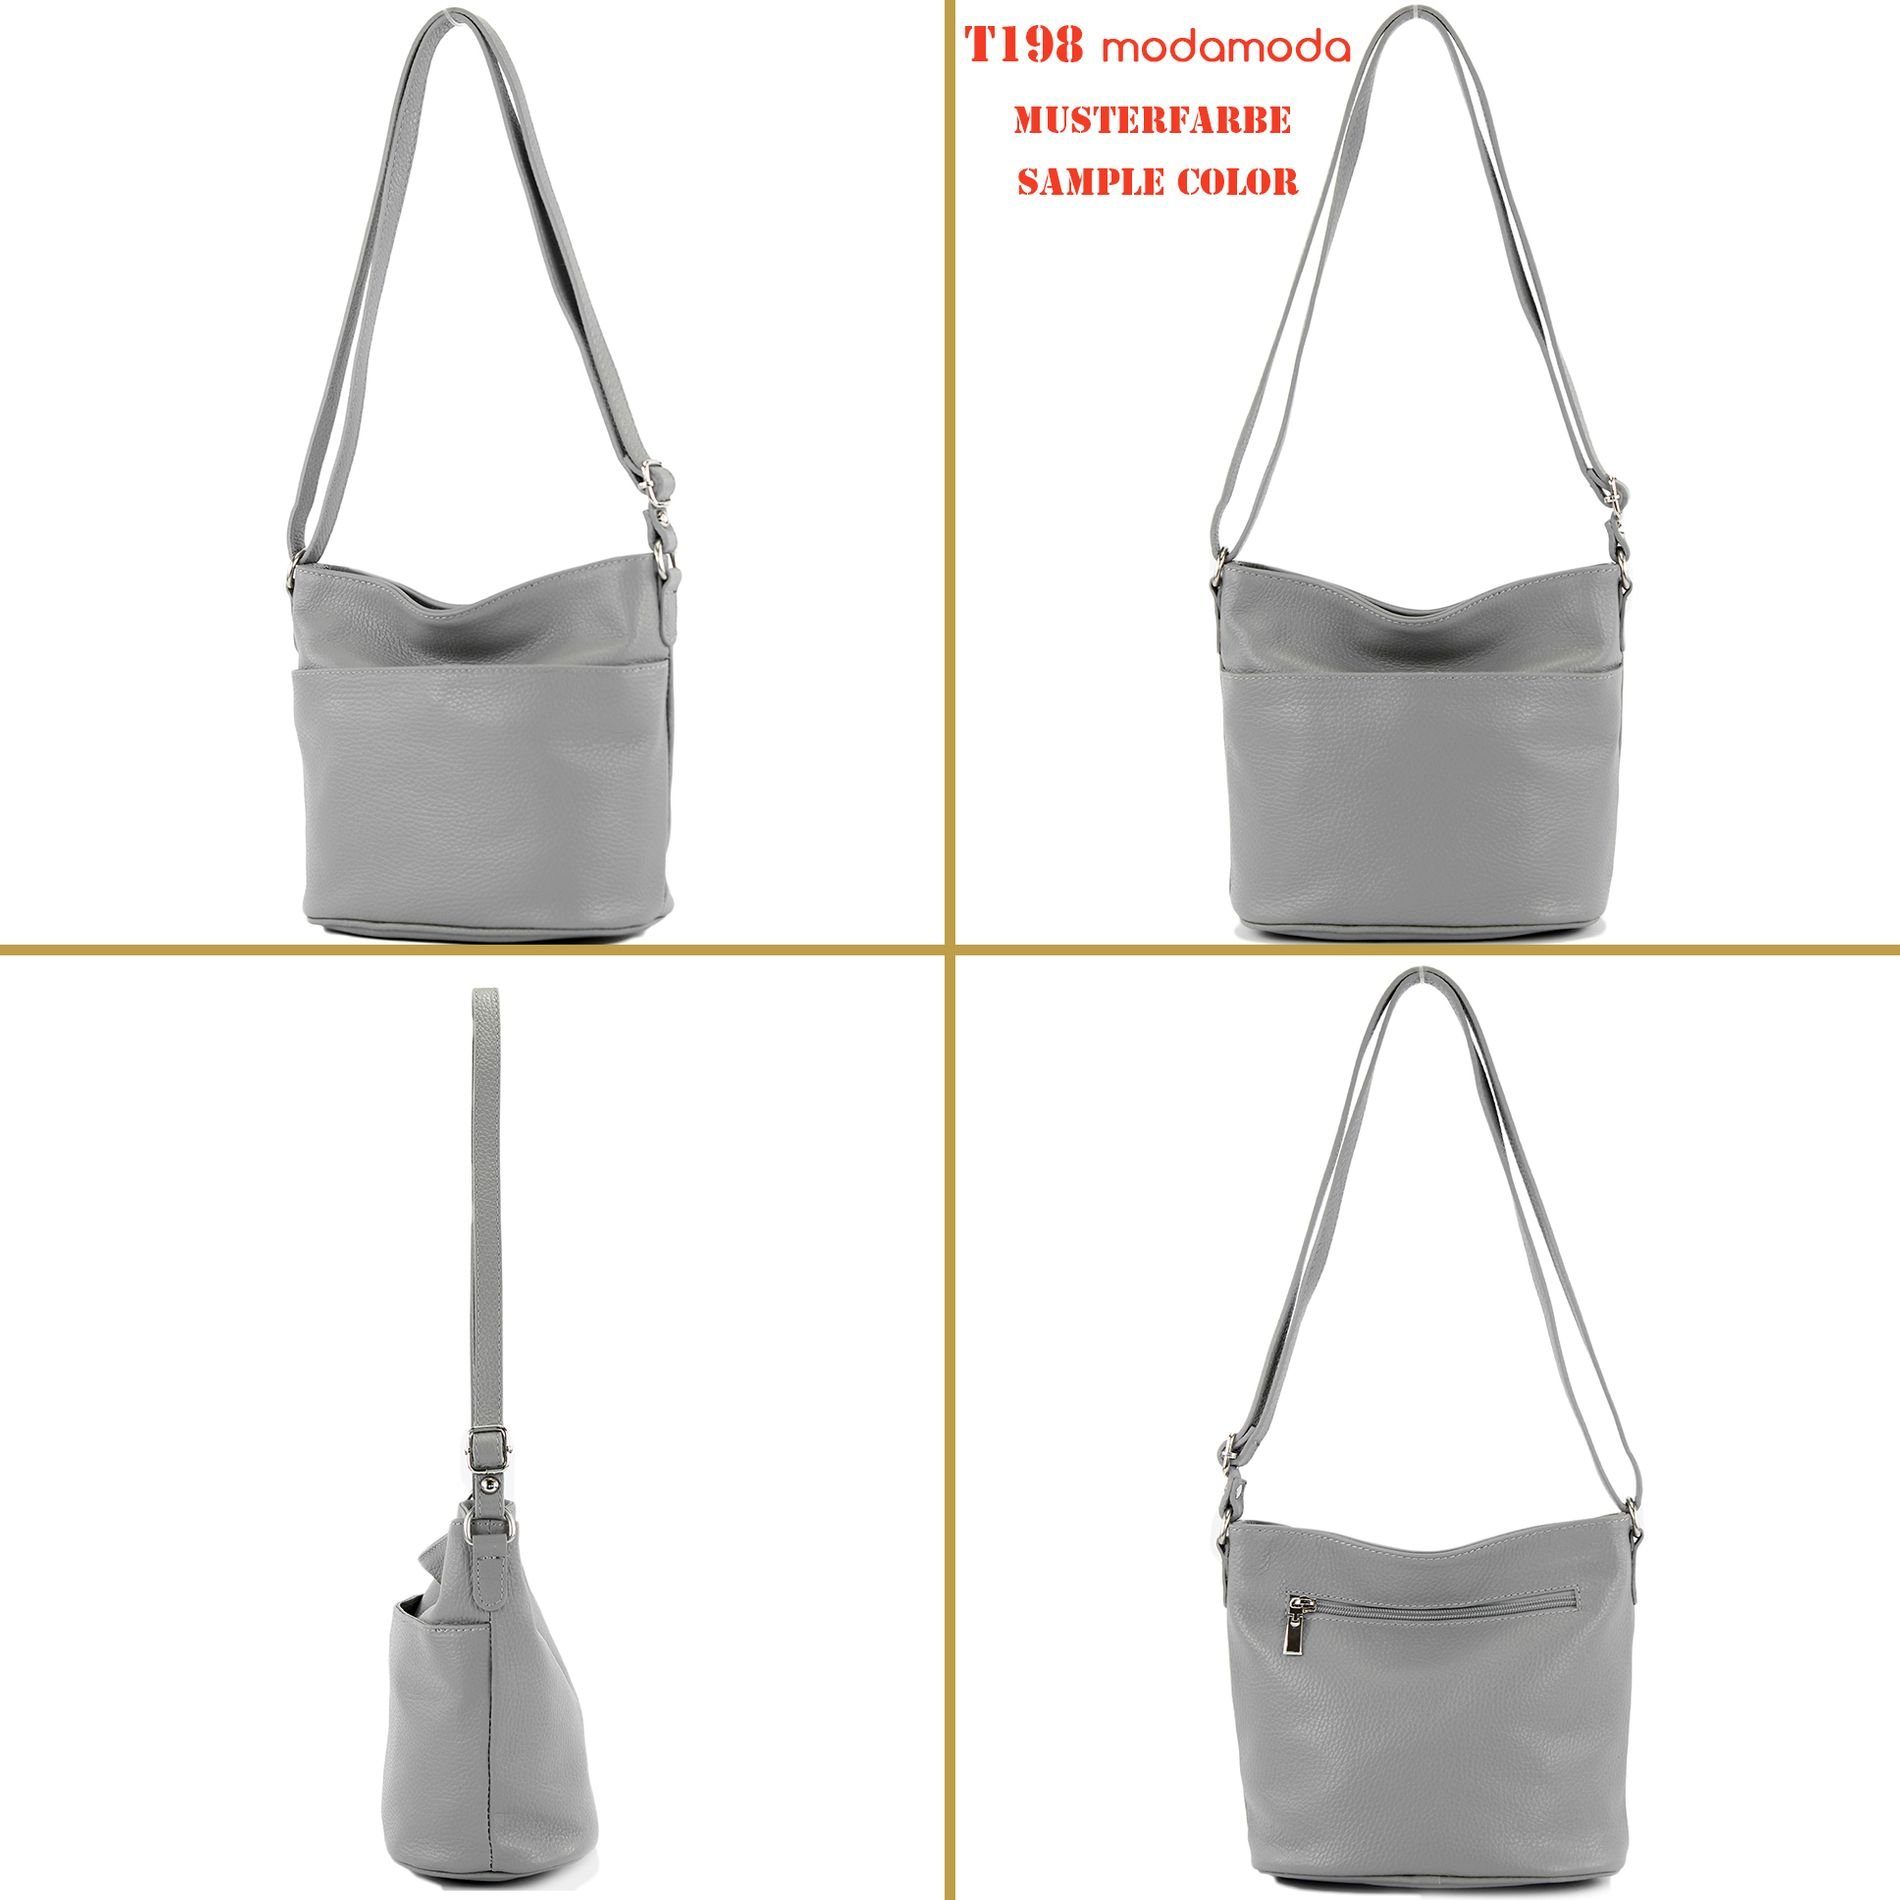 Damen Handtaschen modamoda de Schultertasche T198, Echtleder Handmade in Italy